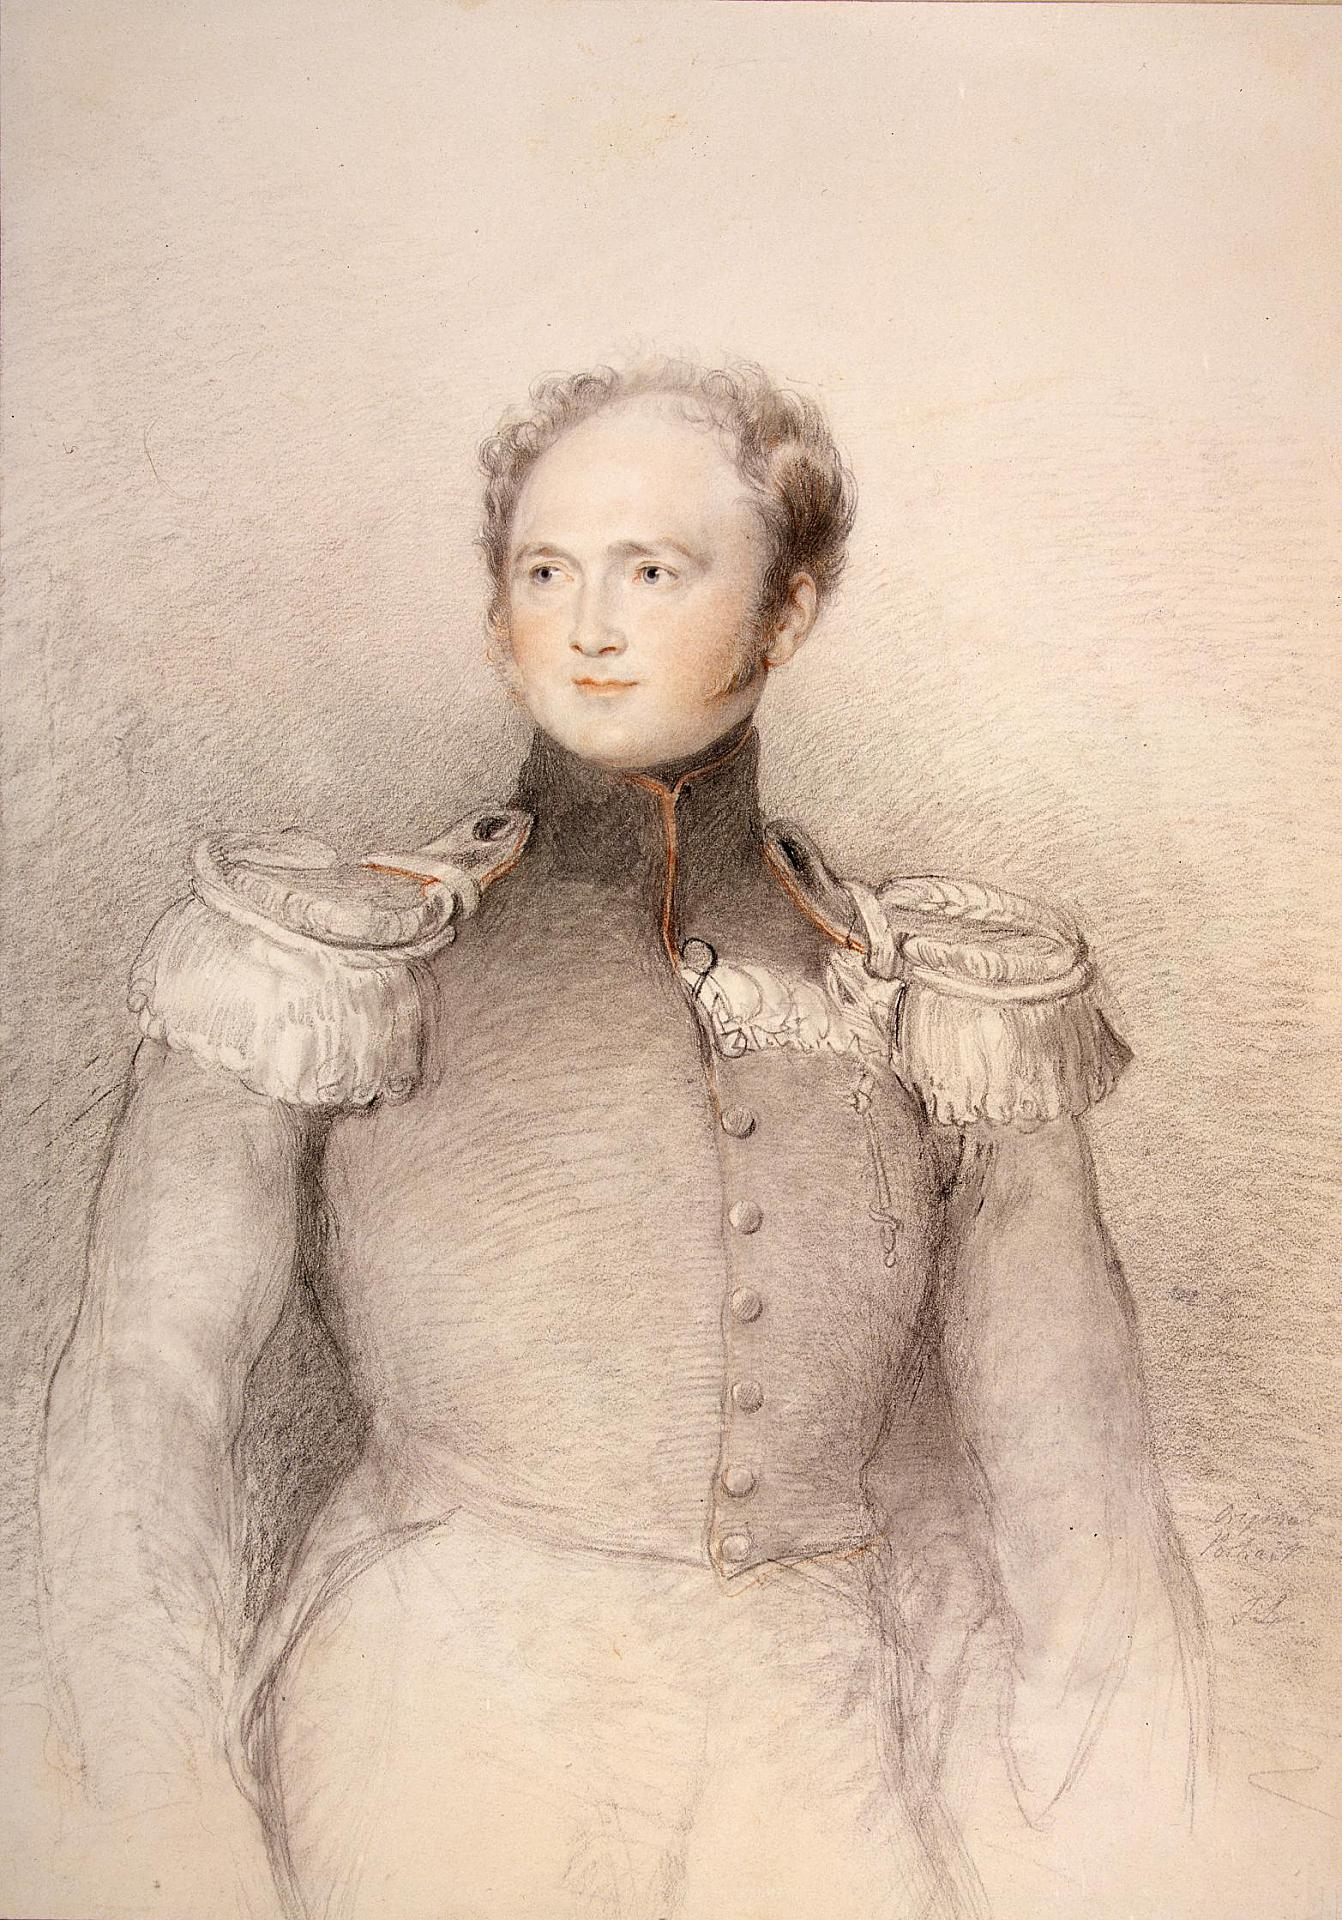 Томас Лоуренс. "Портрет императора Александра I". 1818.